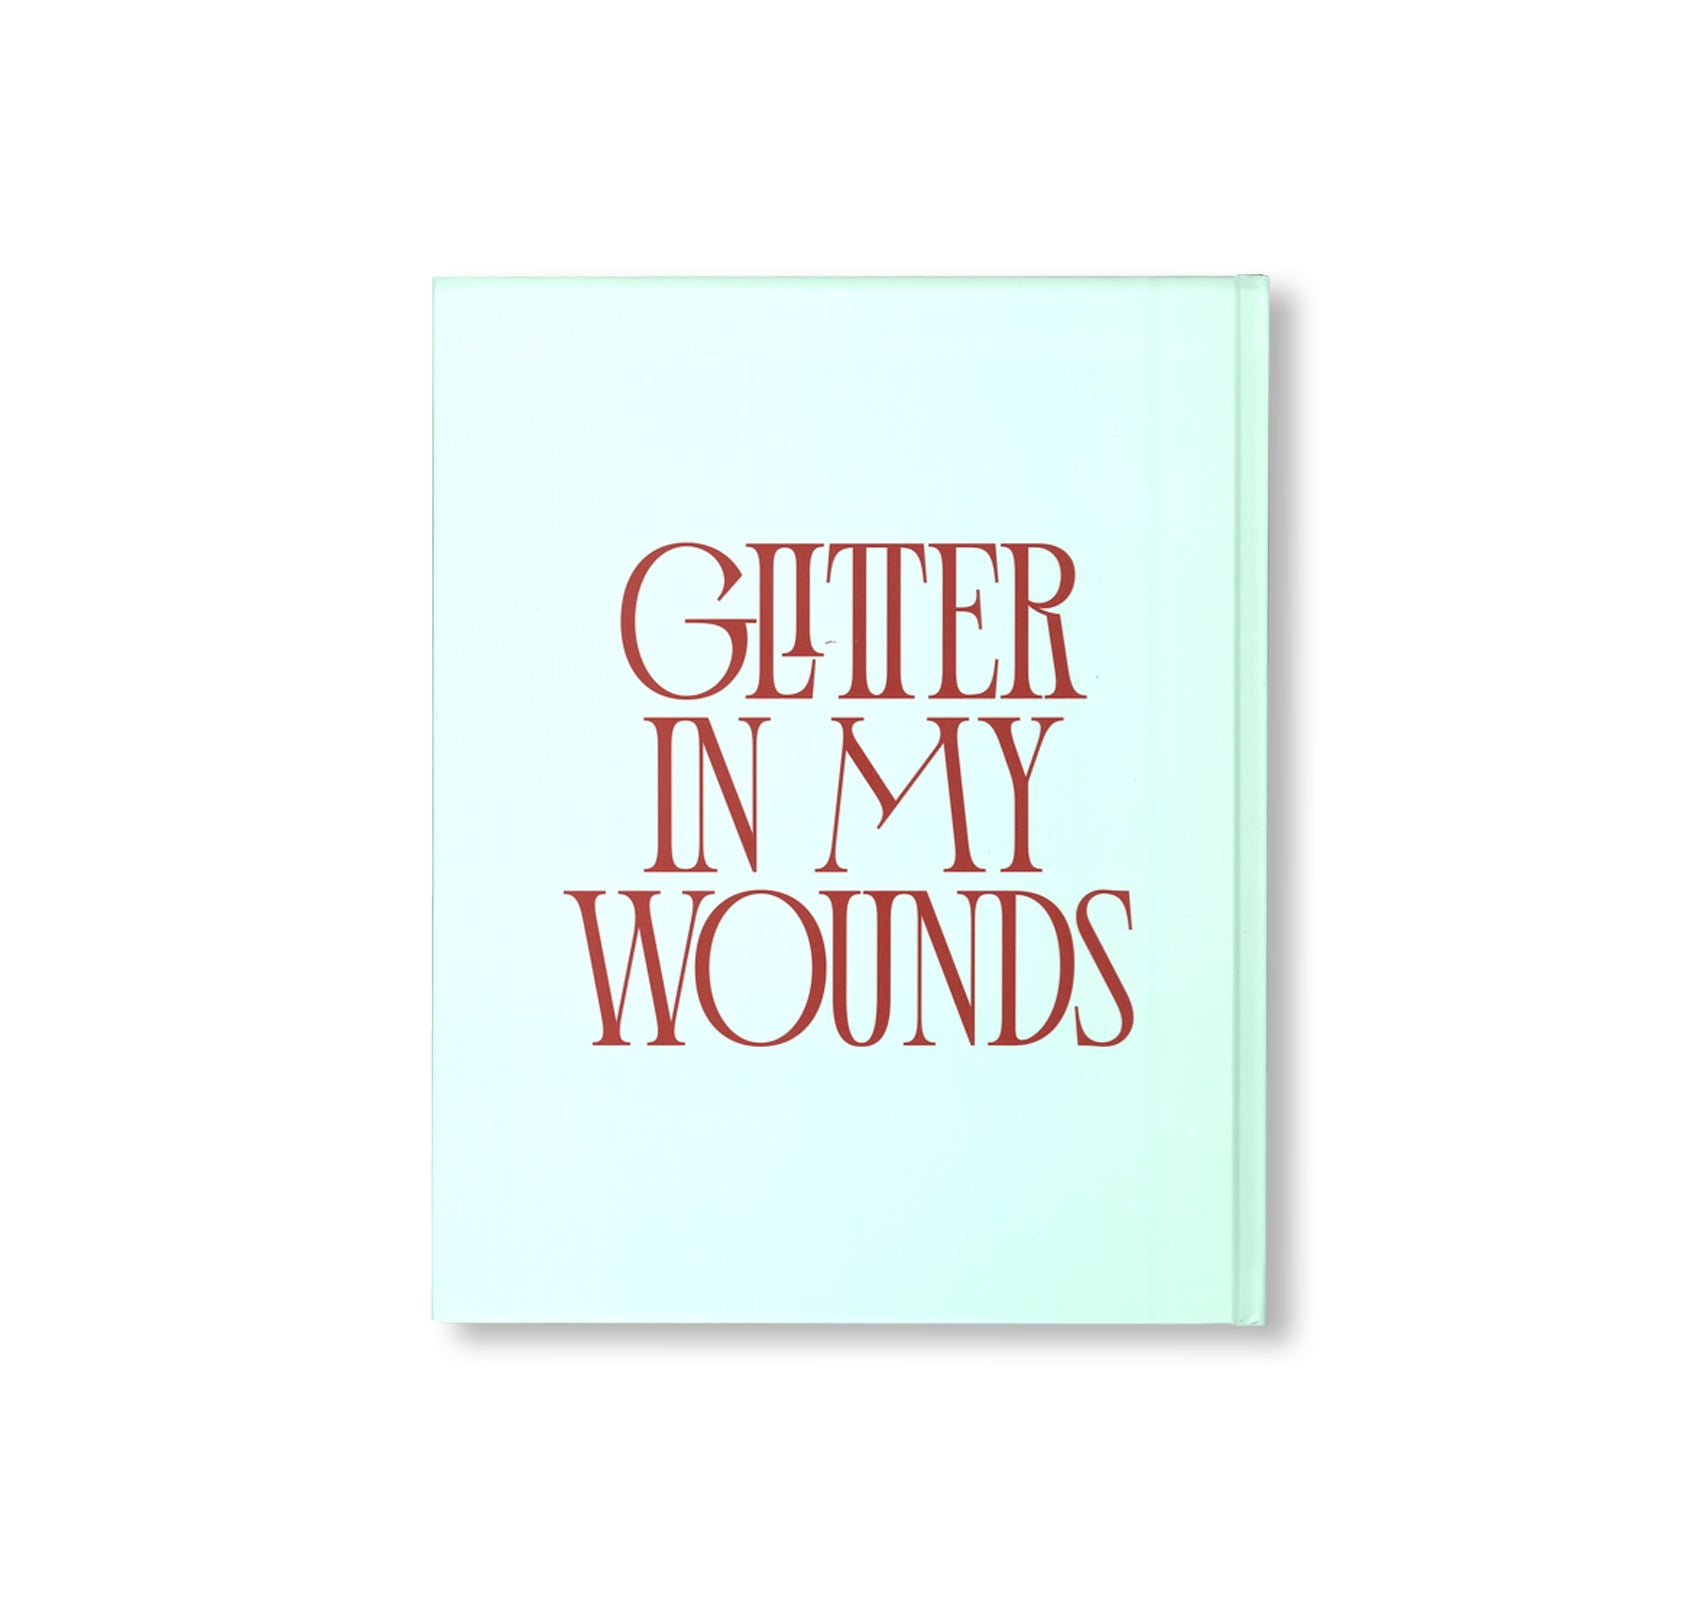 GLITTER IN MY WOUNDS by Adam Broomberg + CAConrad + Gersande Spelsberg